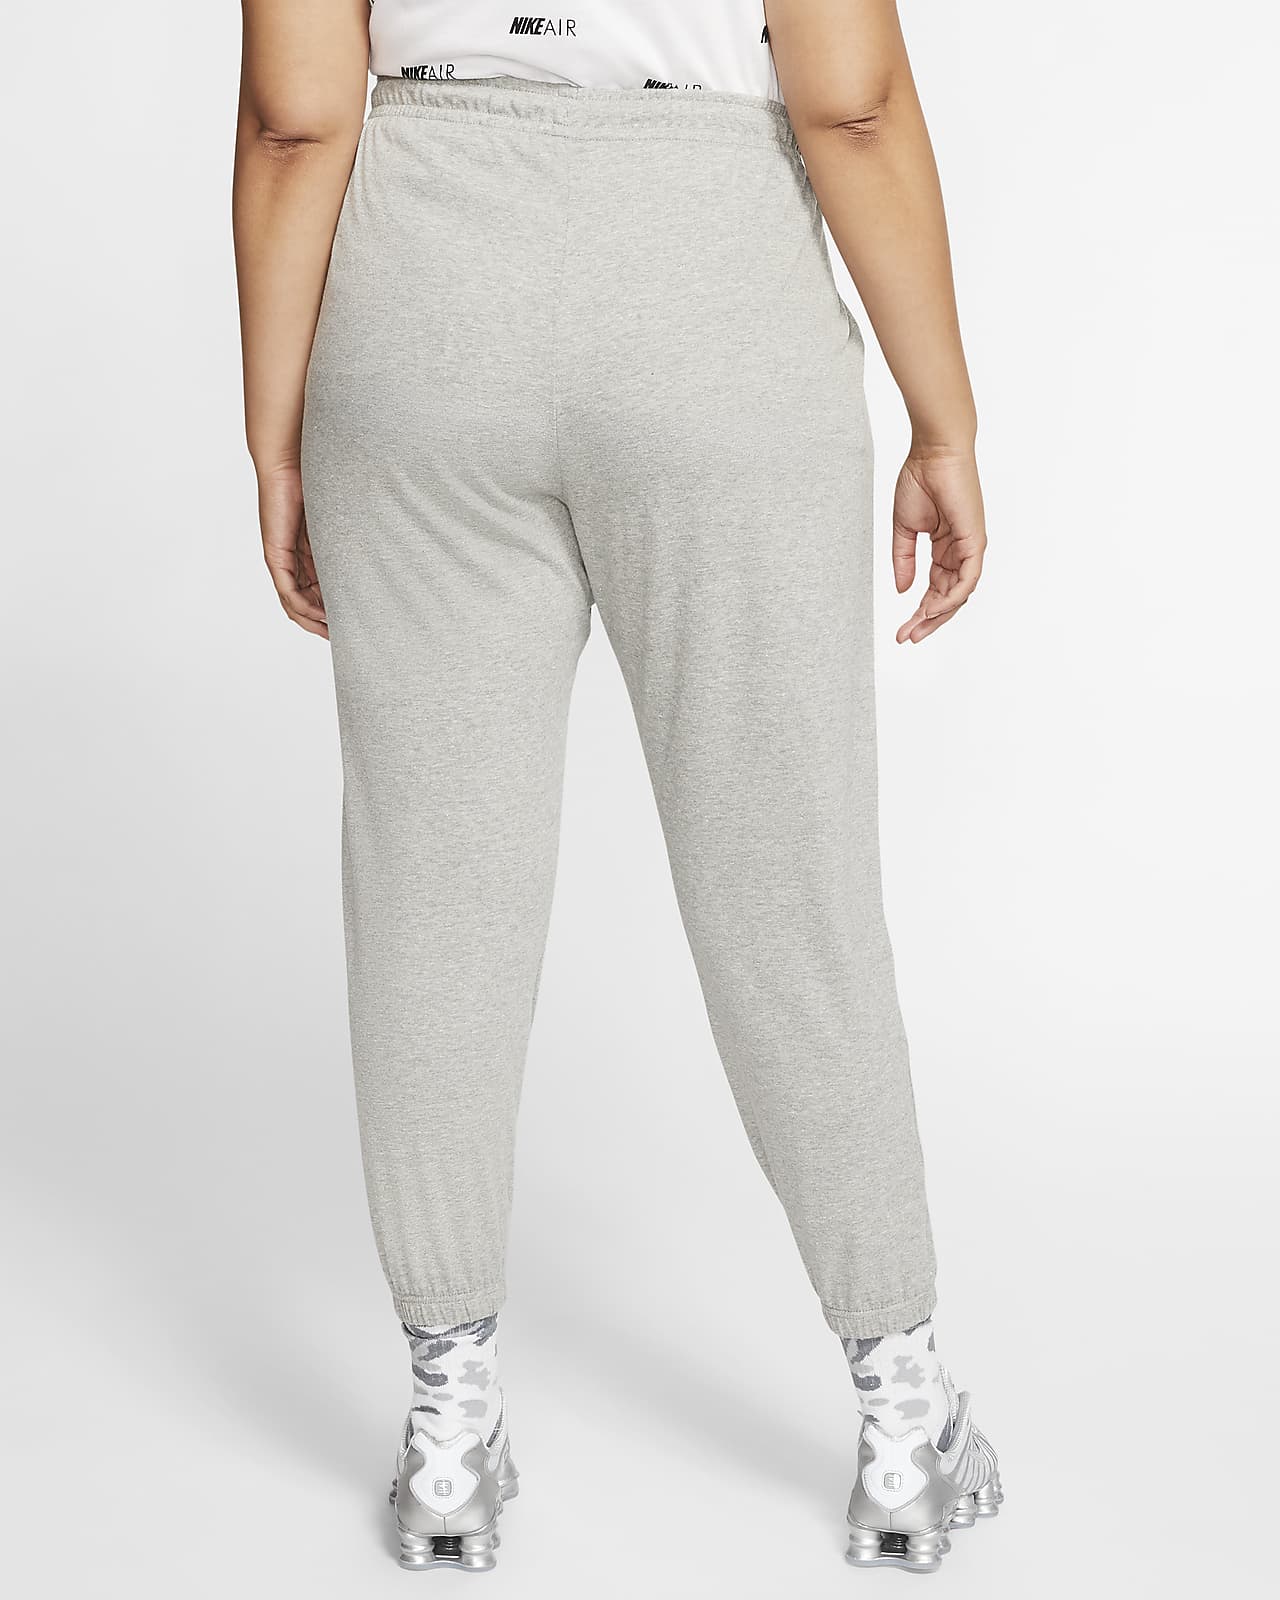 nike gray women's sweatpants